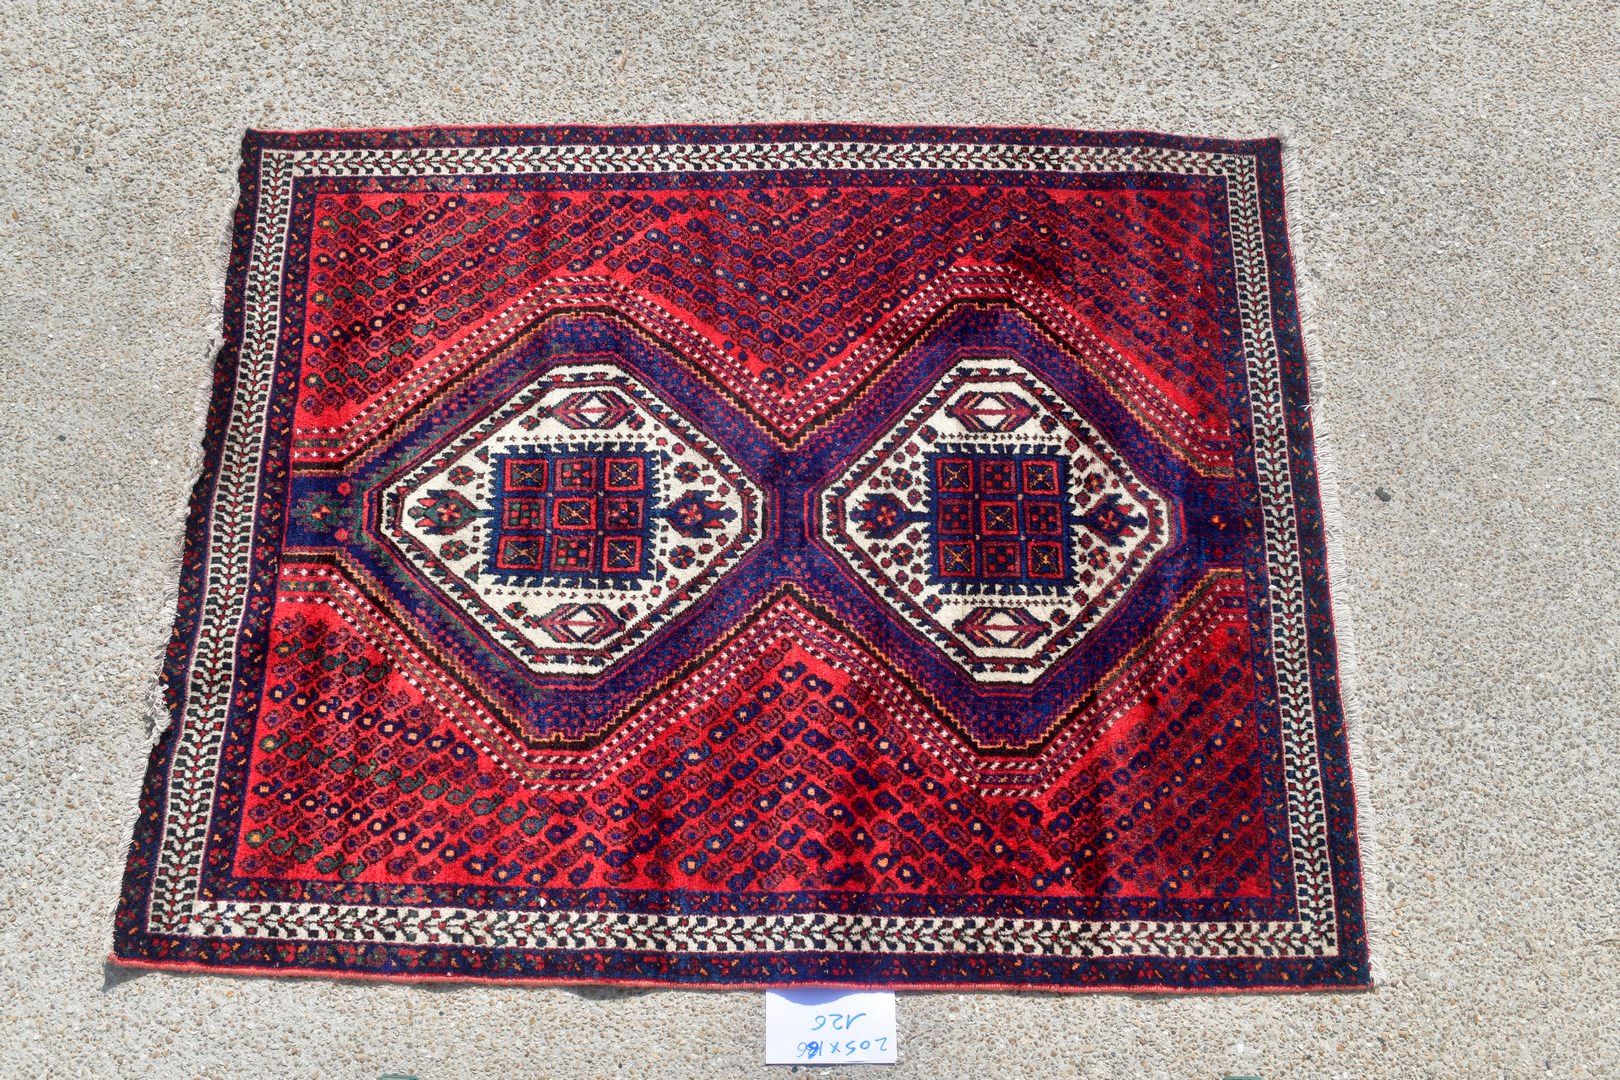 Null 阿夫沙尔（伊朗），1975年。

羊毛天鹅绒，棉质基础。

梅花场上有双六边形奖章。

状况良好。

205x166厘米